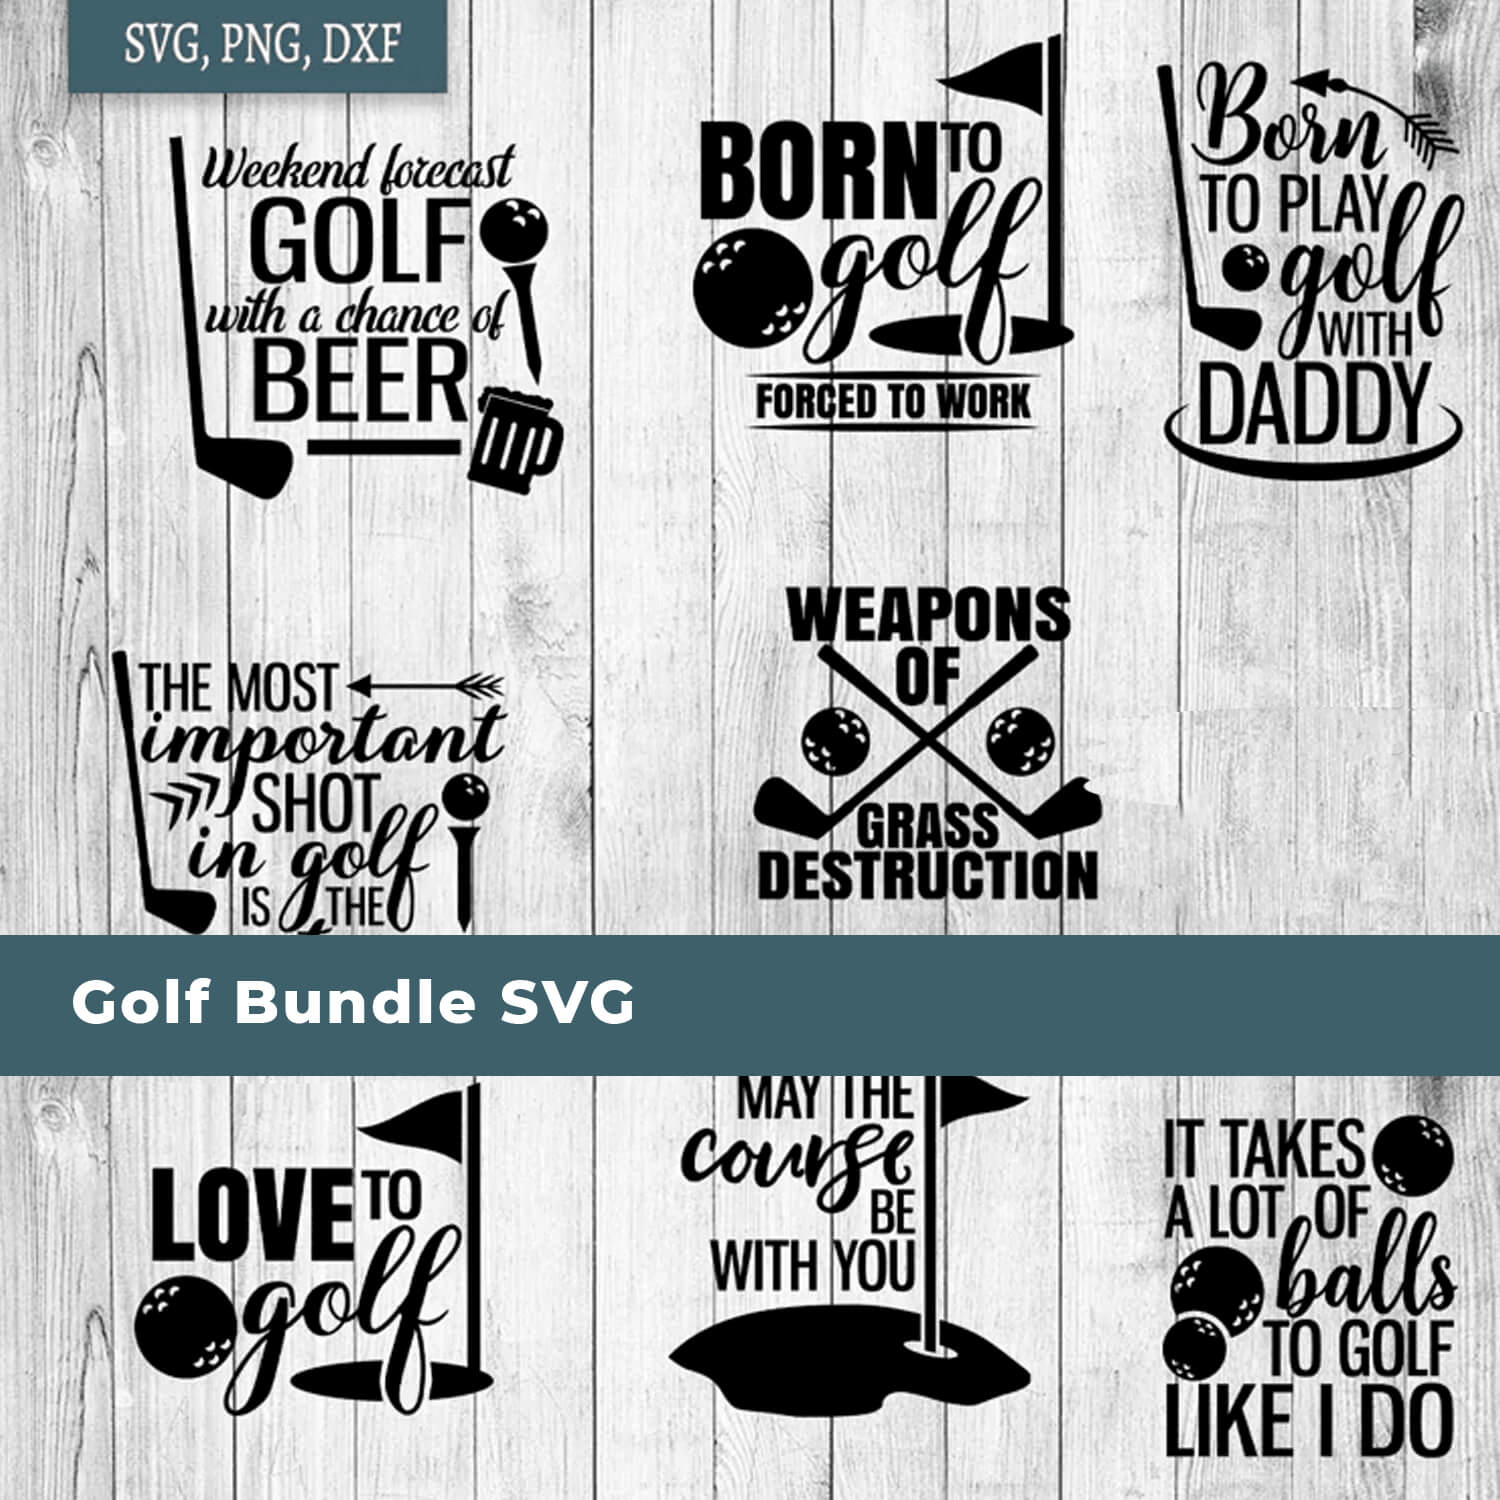 Inscriptions of golf bundle SVG.